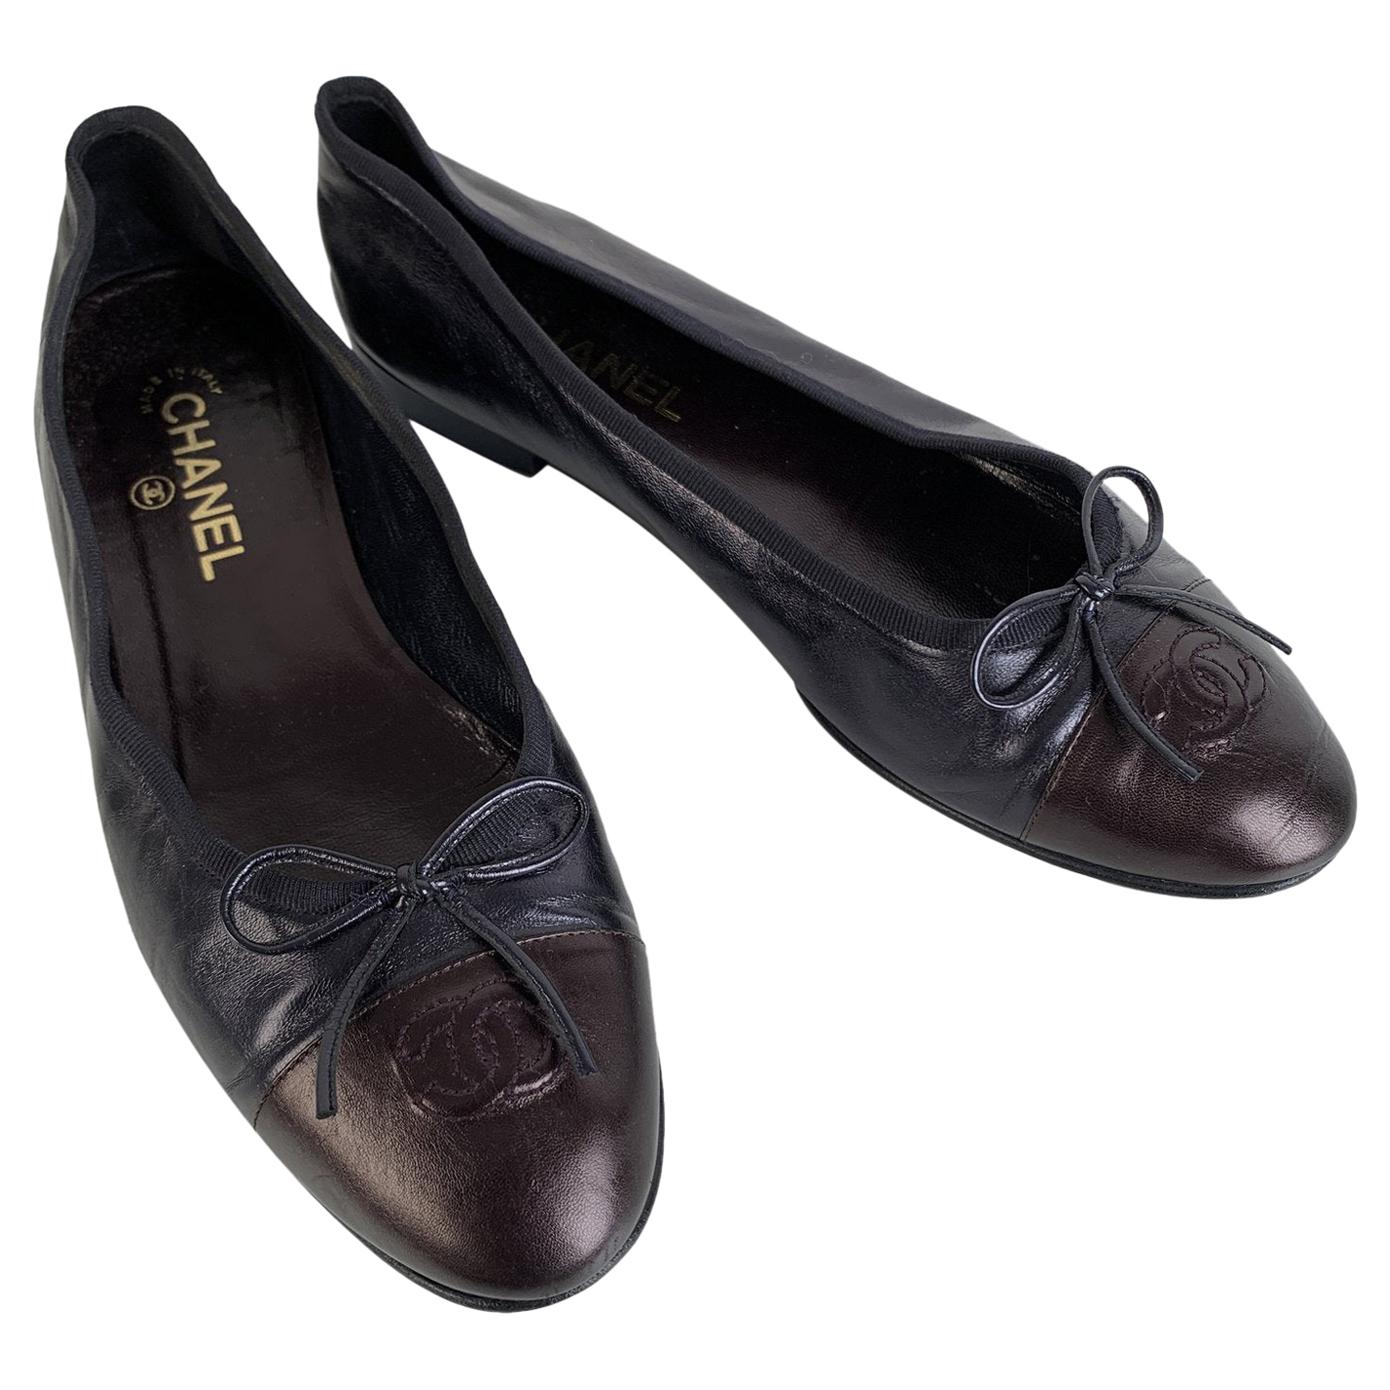 Chanel Black Leather Ballet Flat Ballerina Shoes Size 41